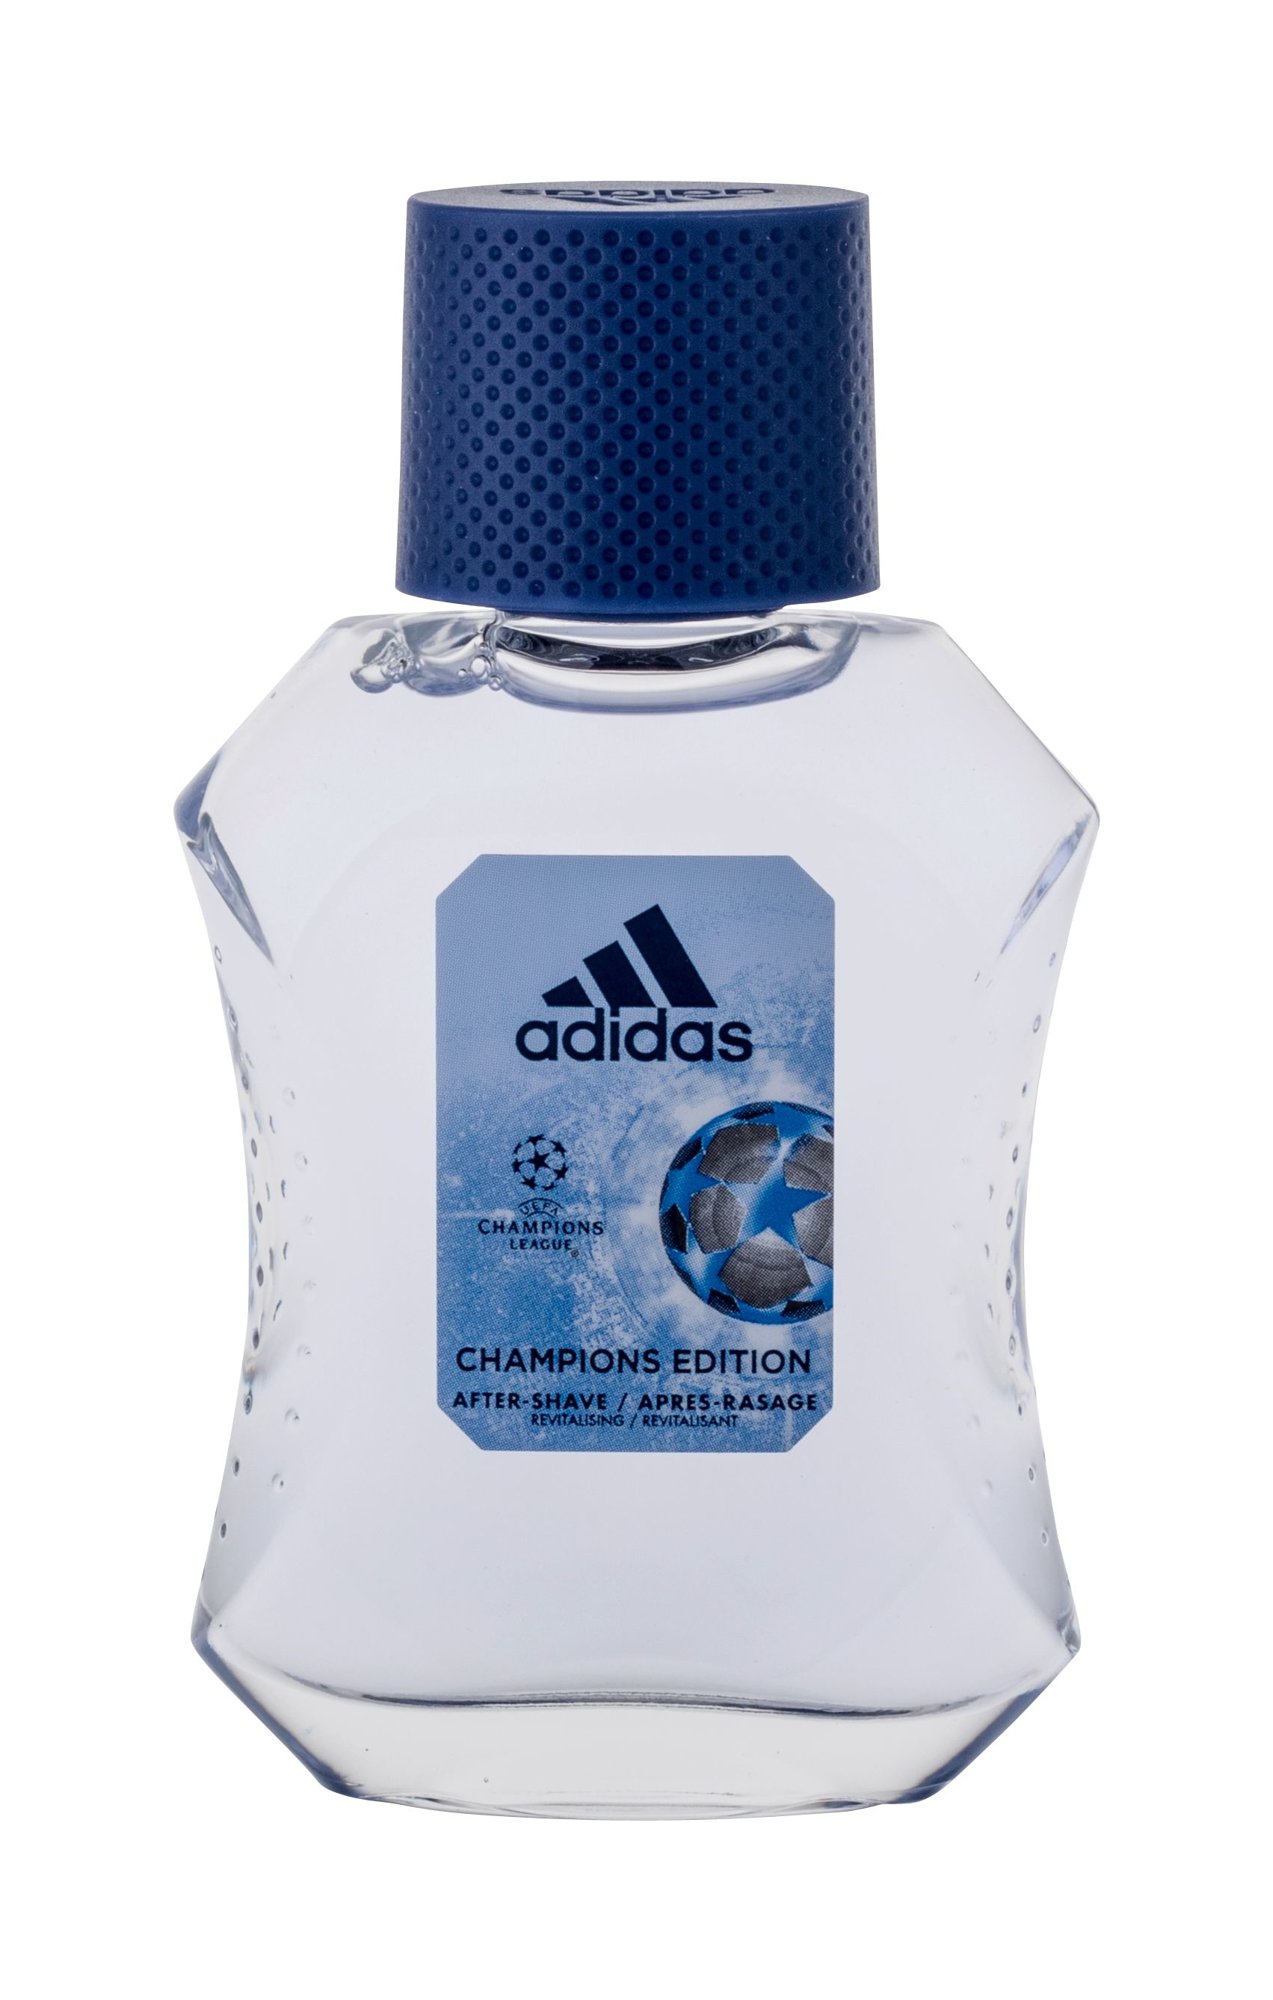 Adidas UEFA Champions League Champions Edition vanduo po skutimosi